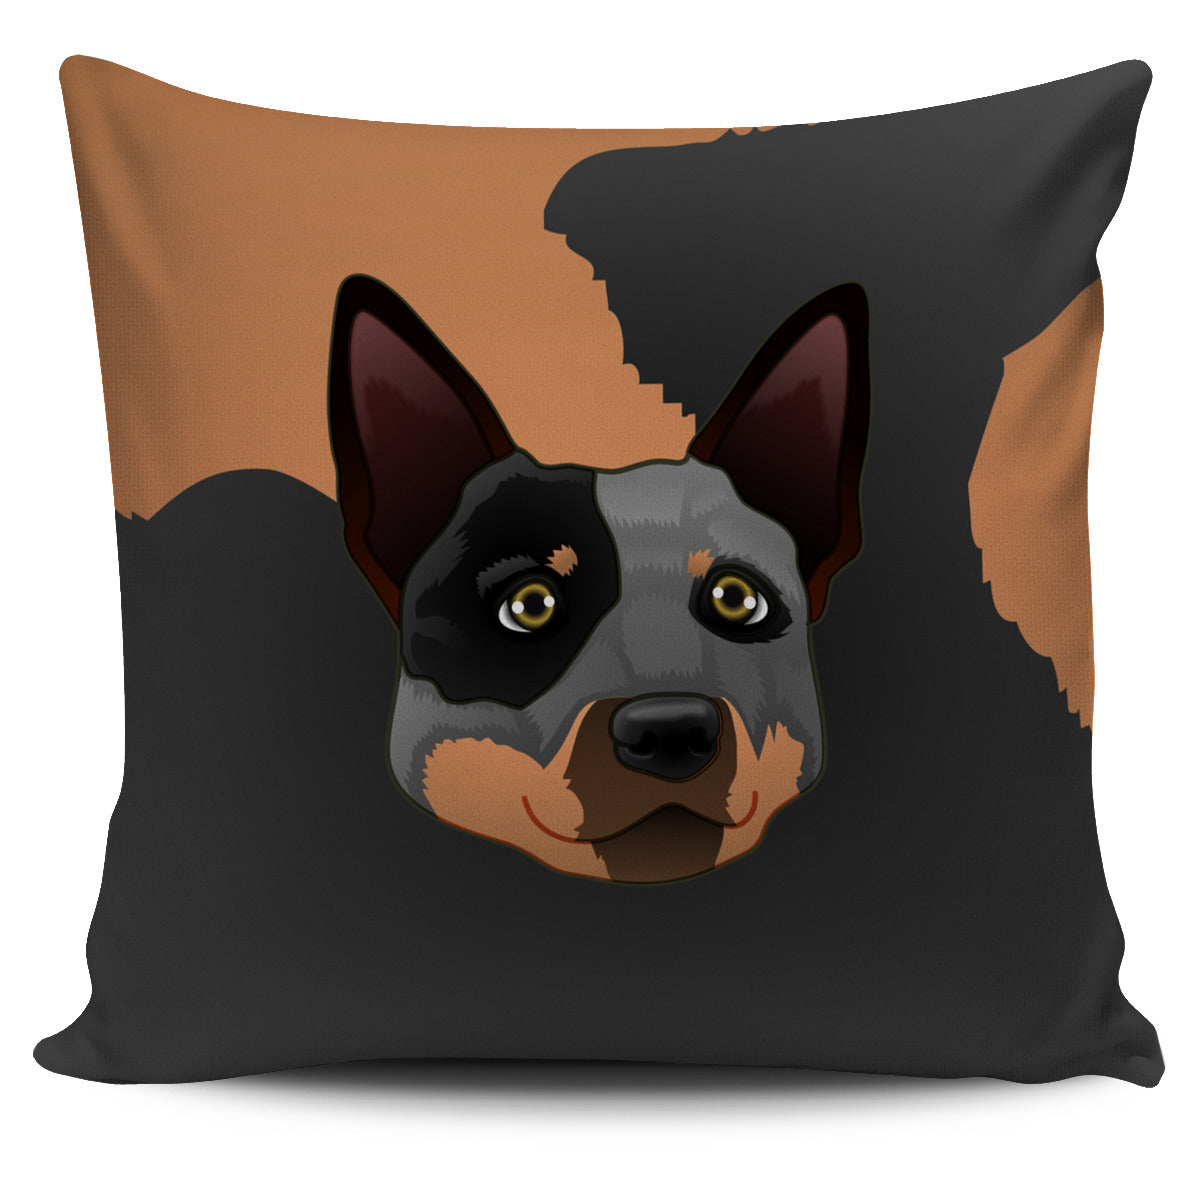 Real Australian Cattle Dog Pillow Cover